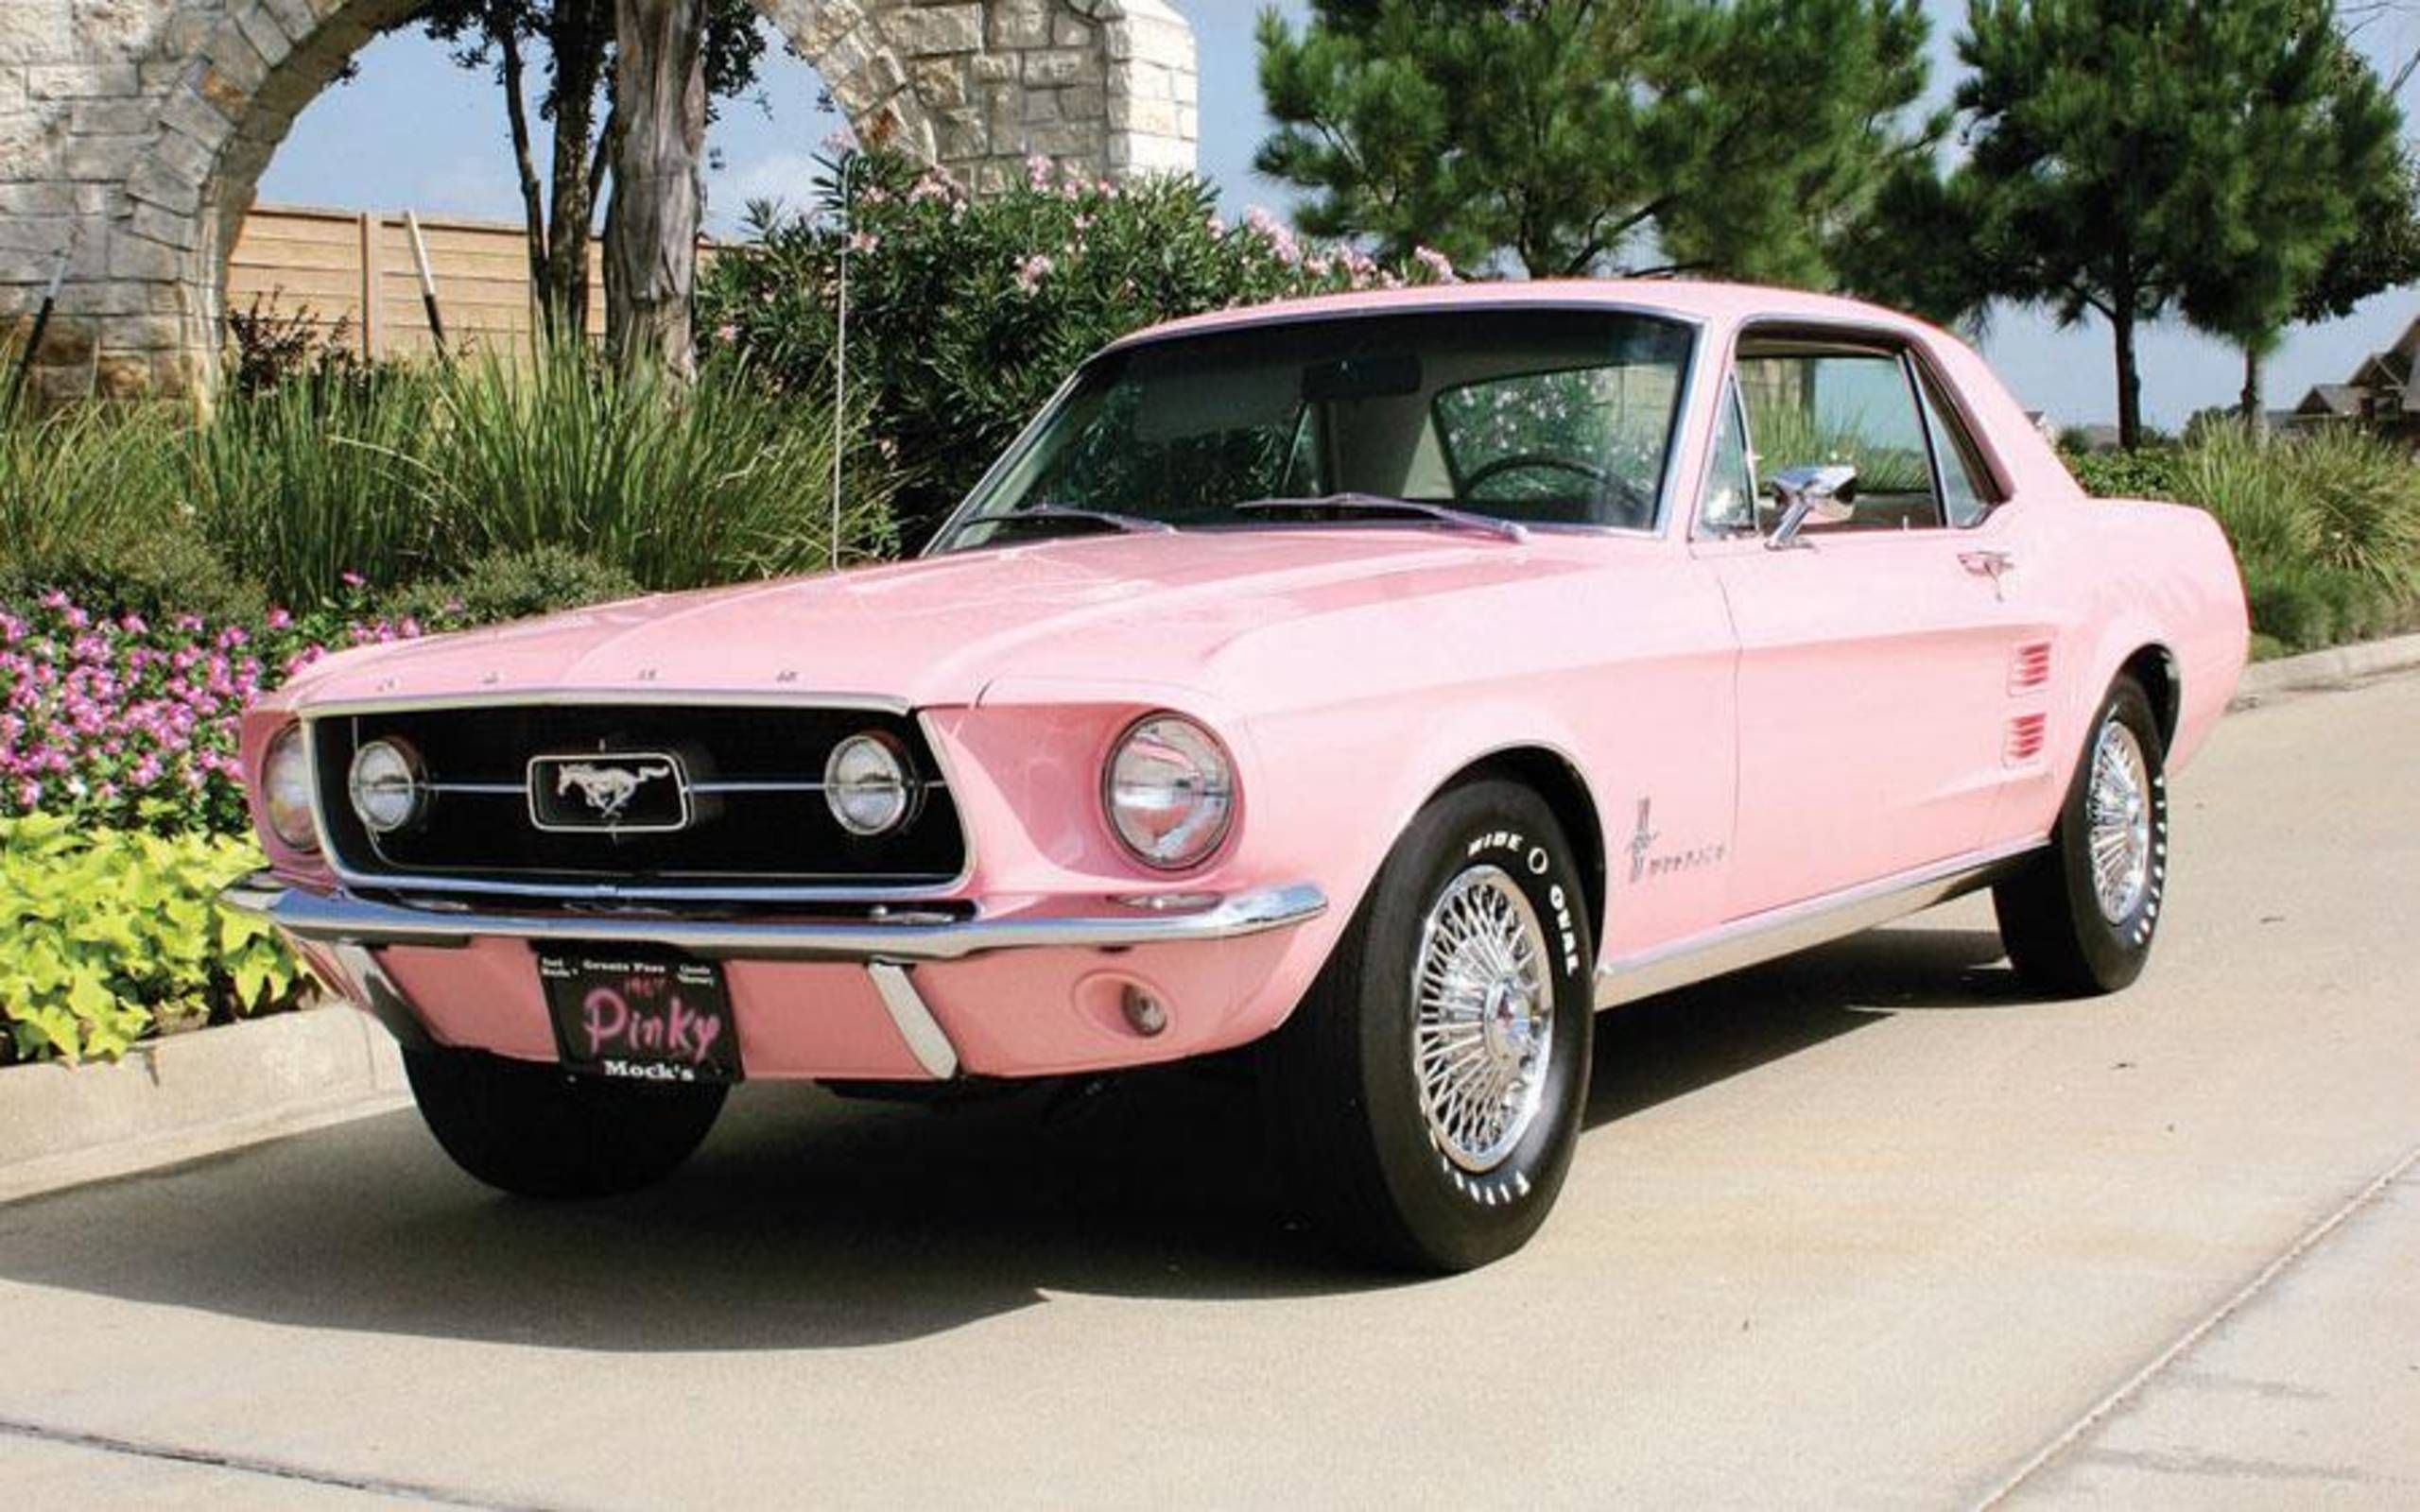 https://www.mustangspecs.com/wp-content/uploads/2020/05/Pink-Mustangs.jpg